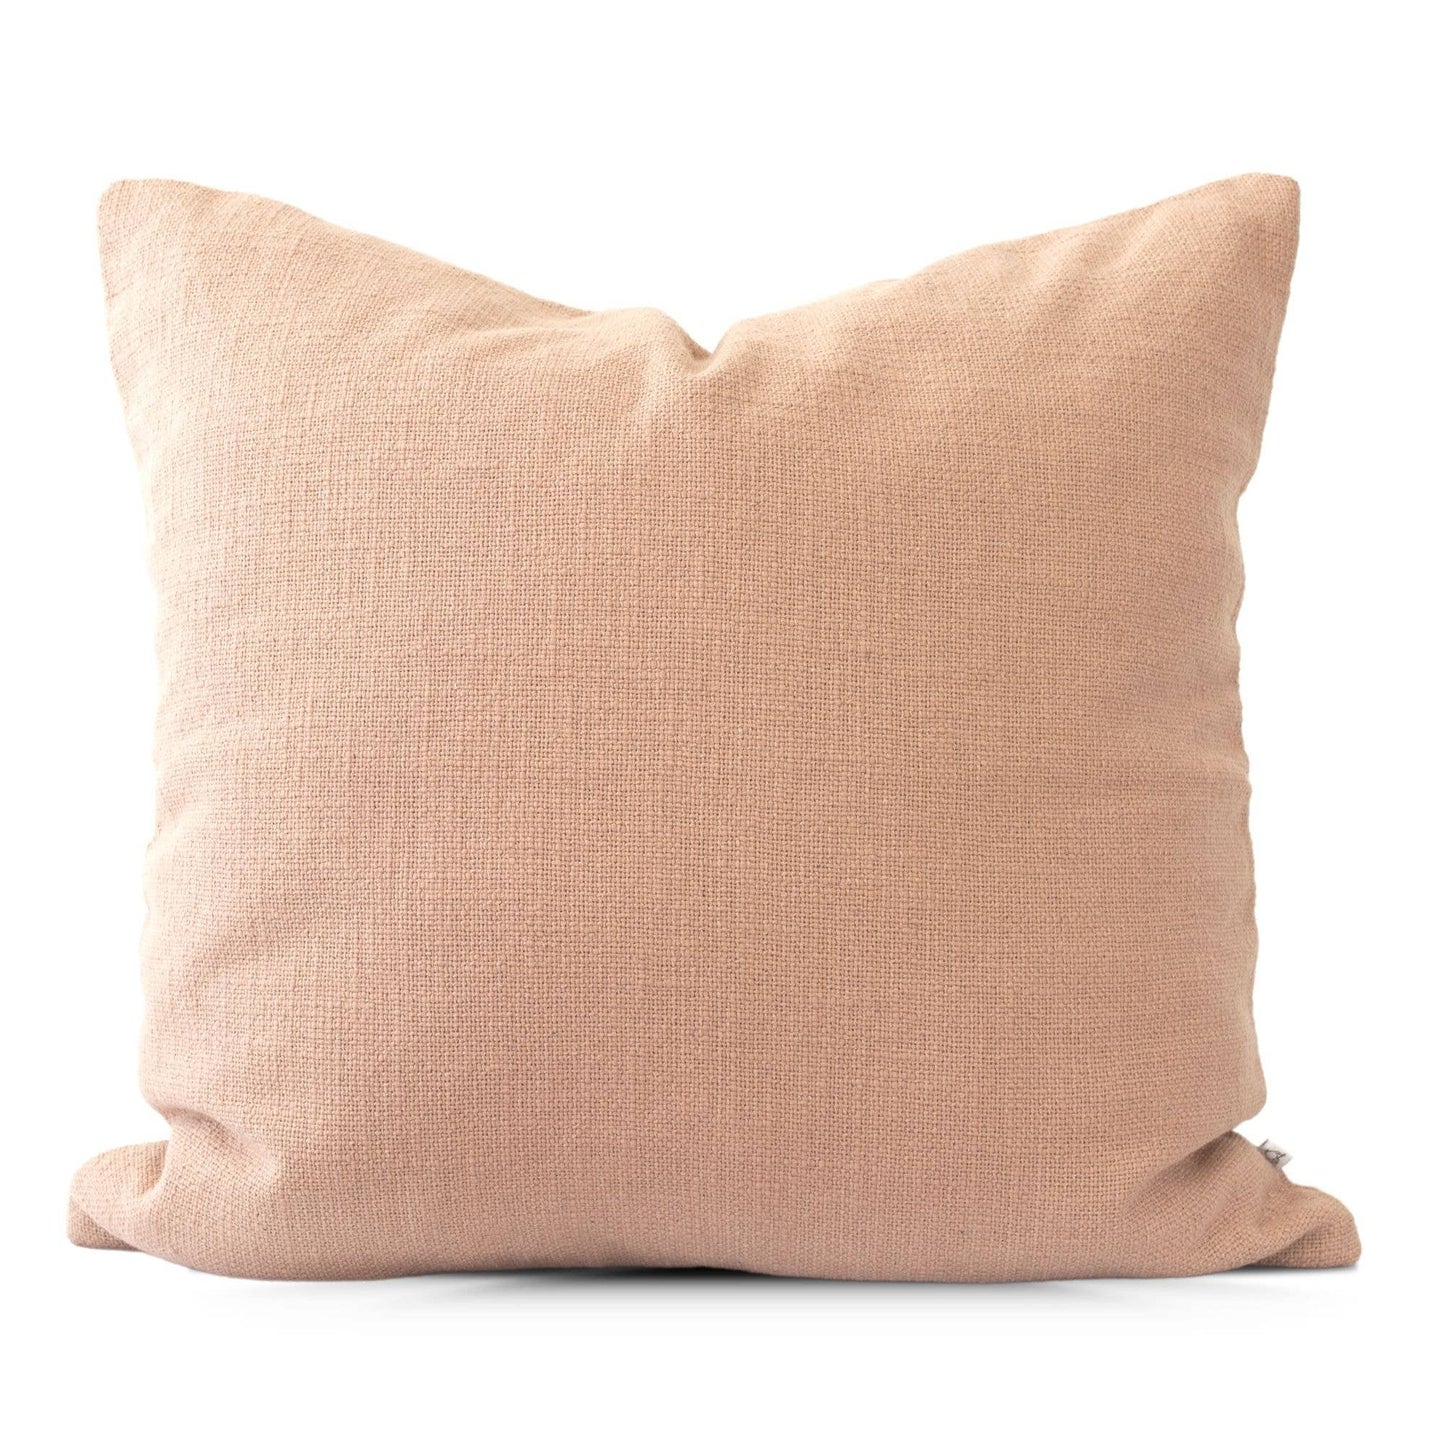 Blush Cotton Pillow Cover 20x20